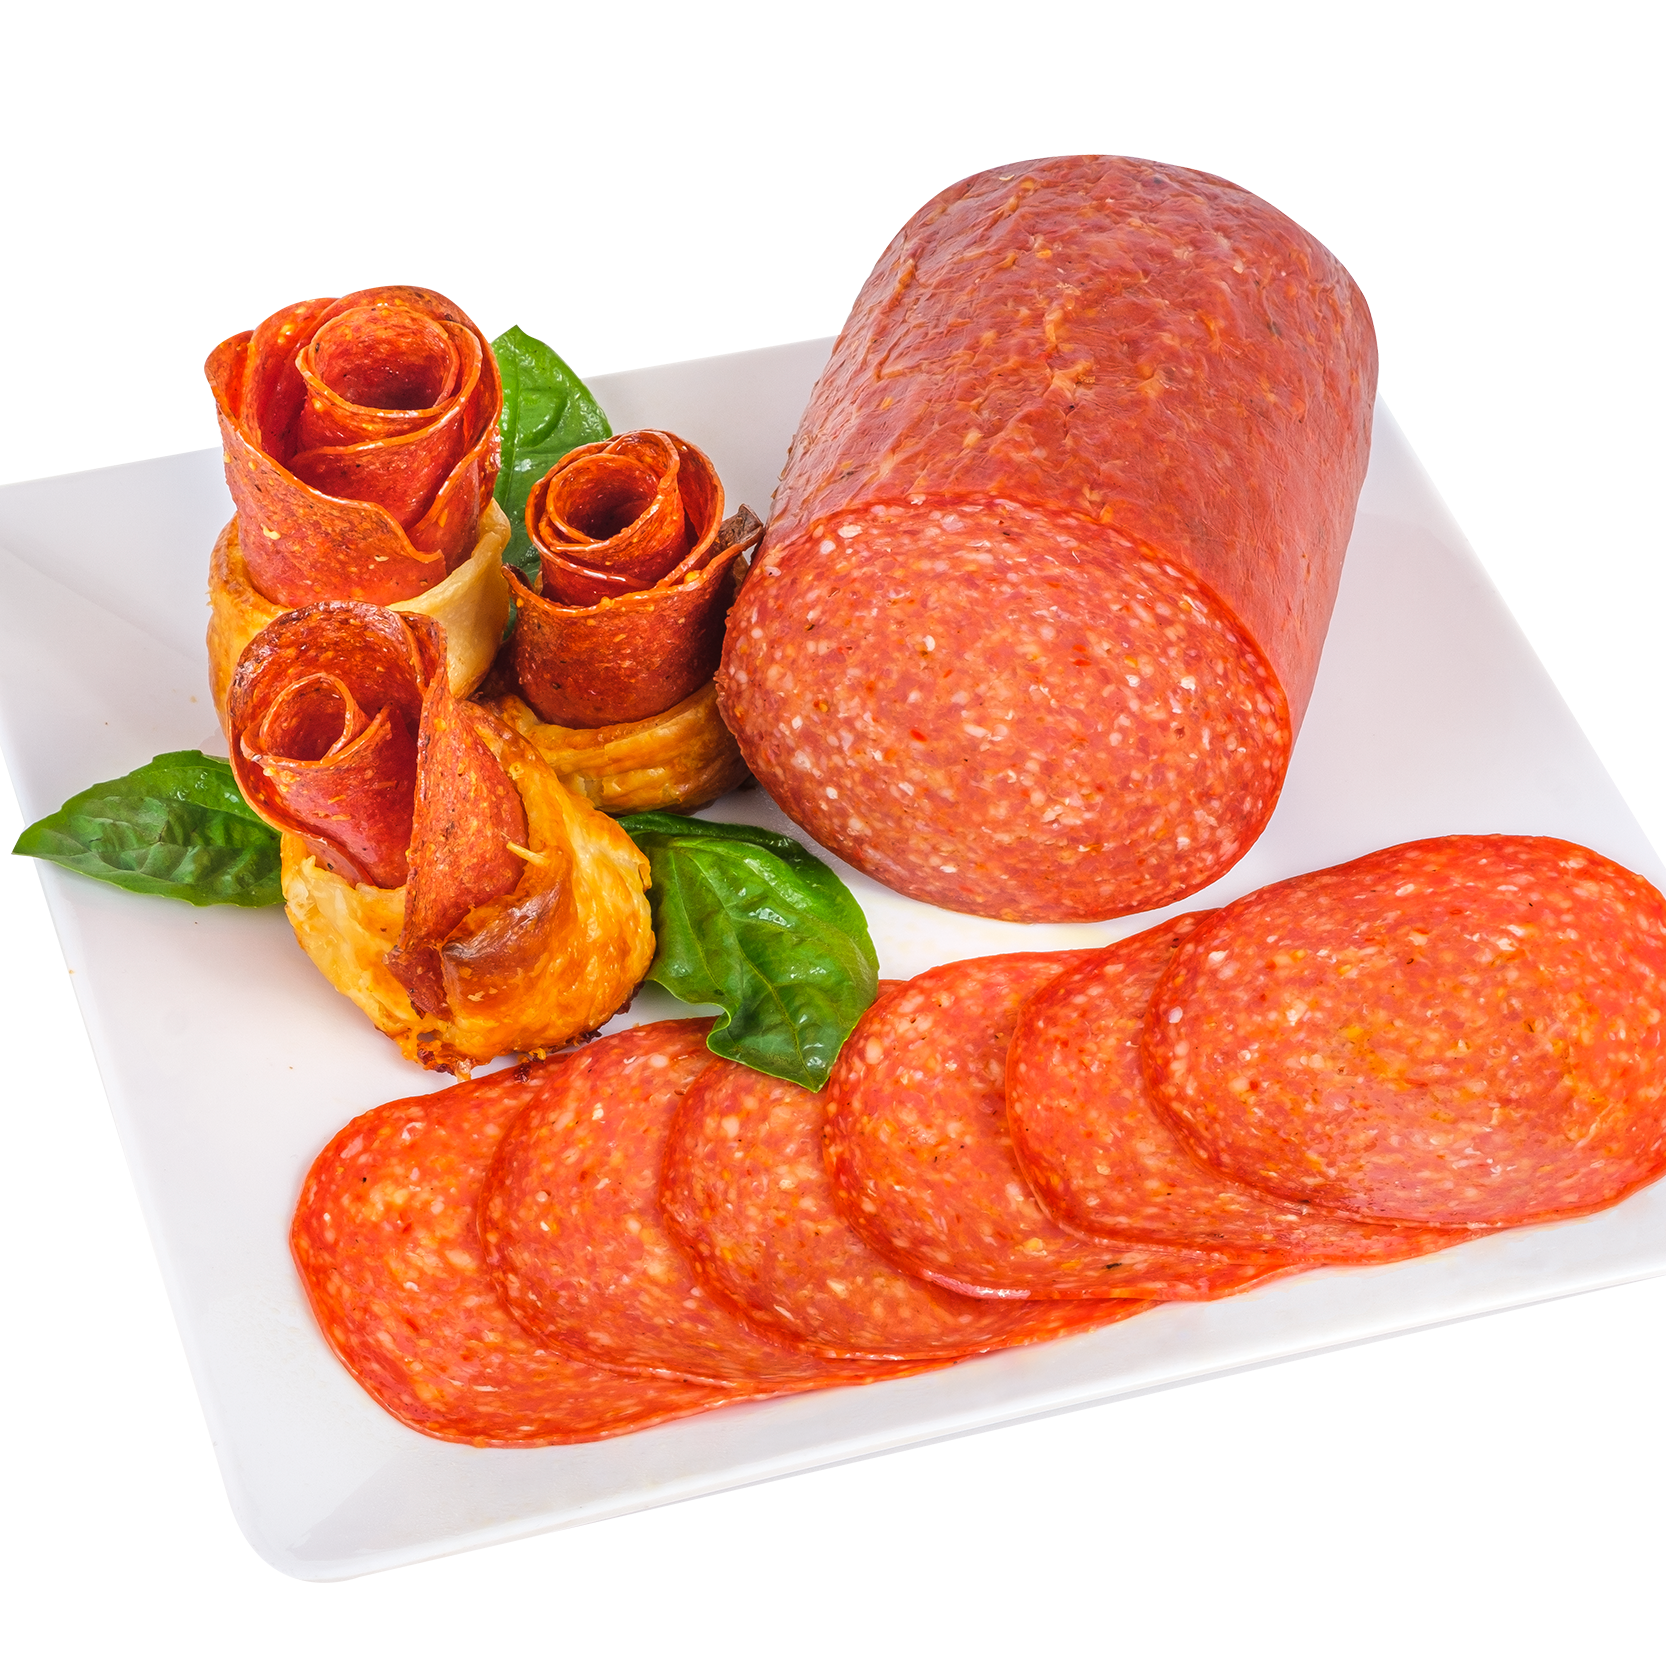 Hungarian Salami Log with Slices